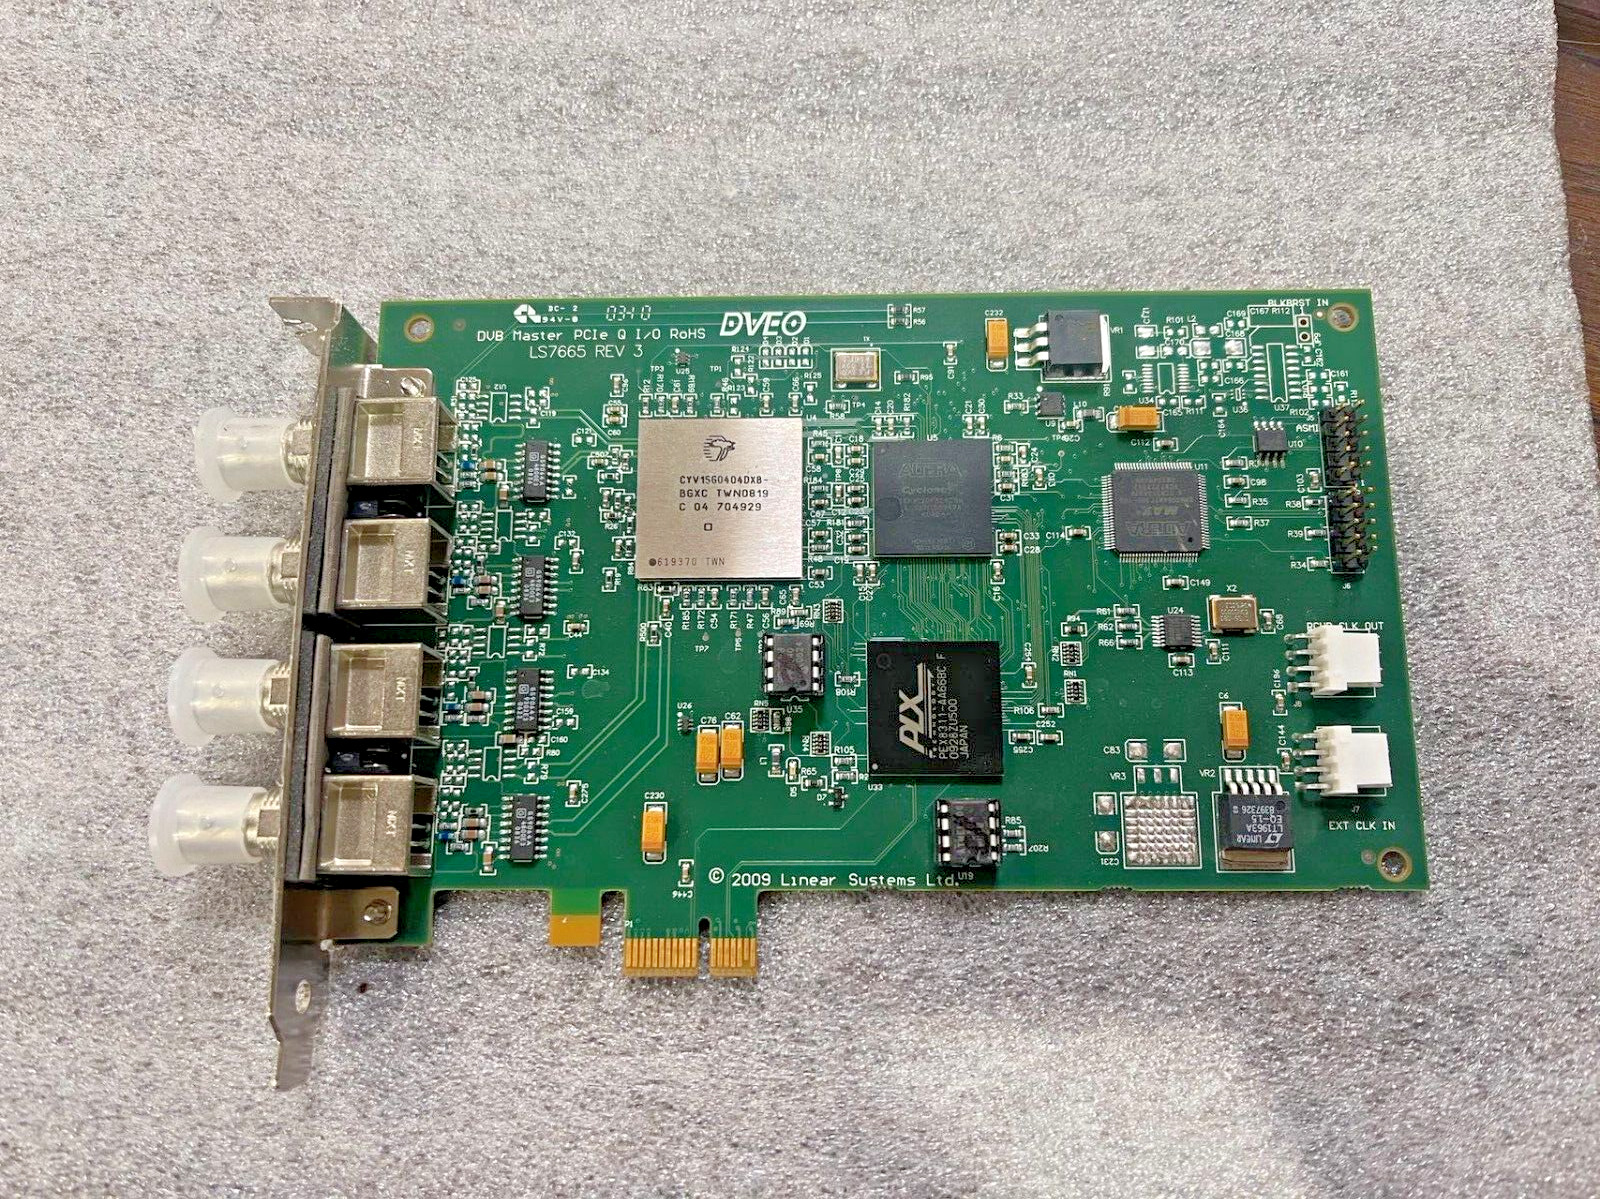 DVEO DVB Master PCIs Q I/O RoHS LS7665 REV 3